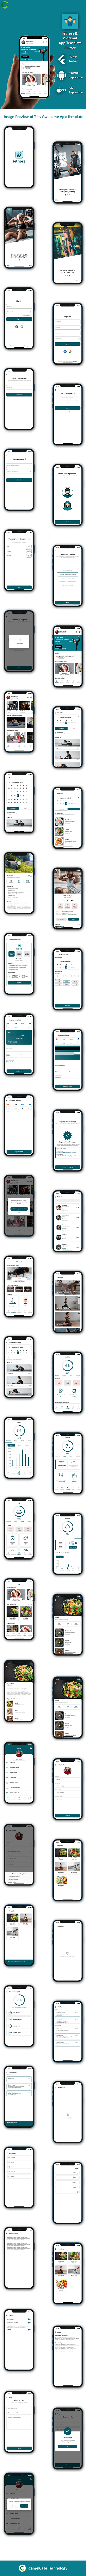 Flutter Fitness Workout App Template in Flutter | Multi Language | FitBit - 7